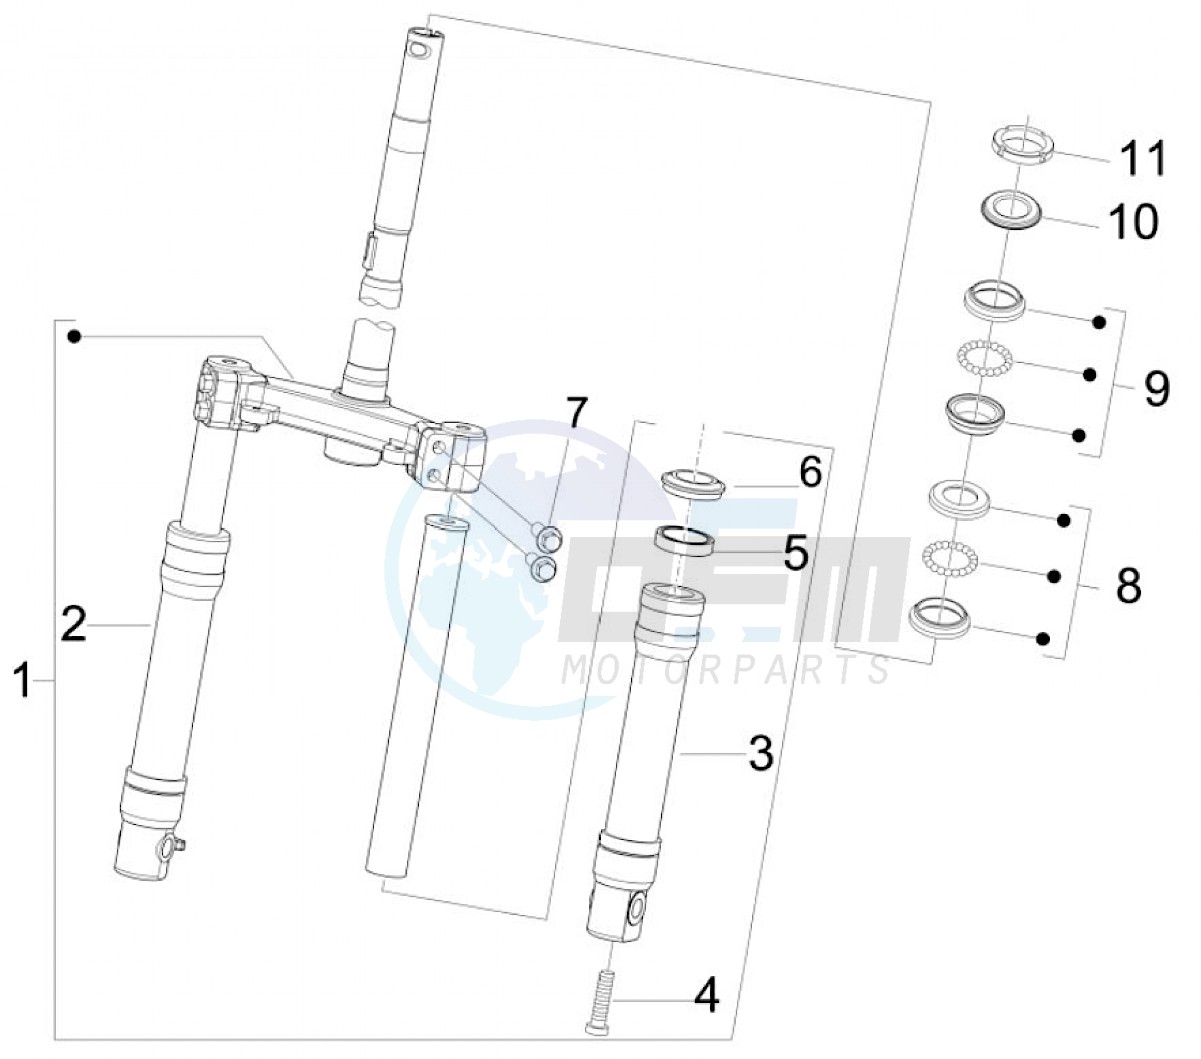 Front fork (Positions) blueprint